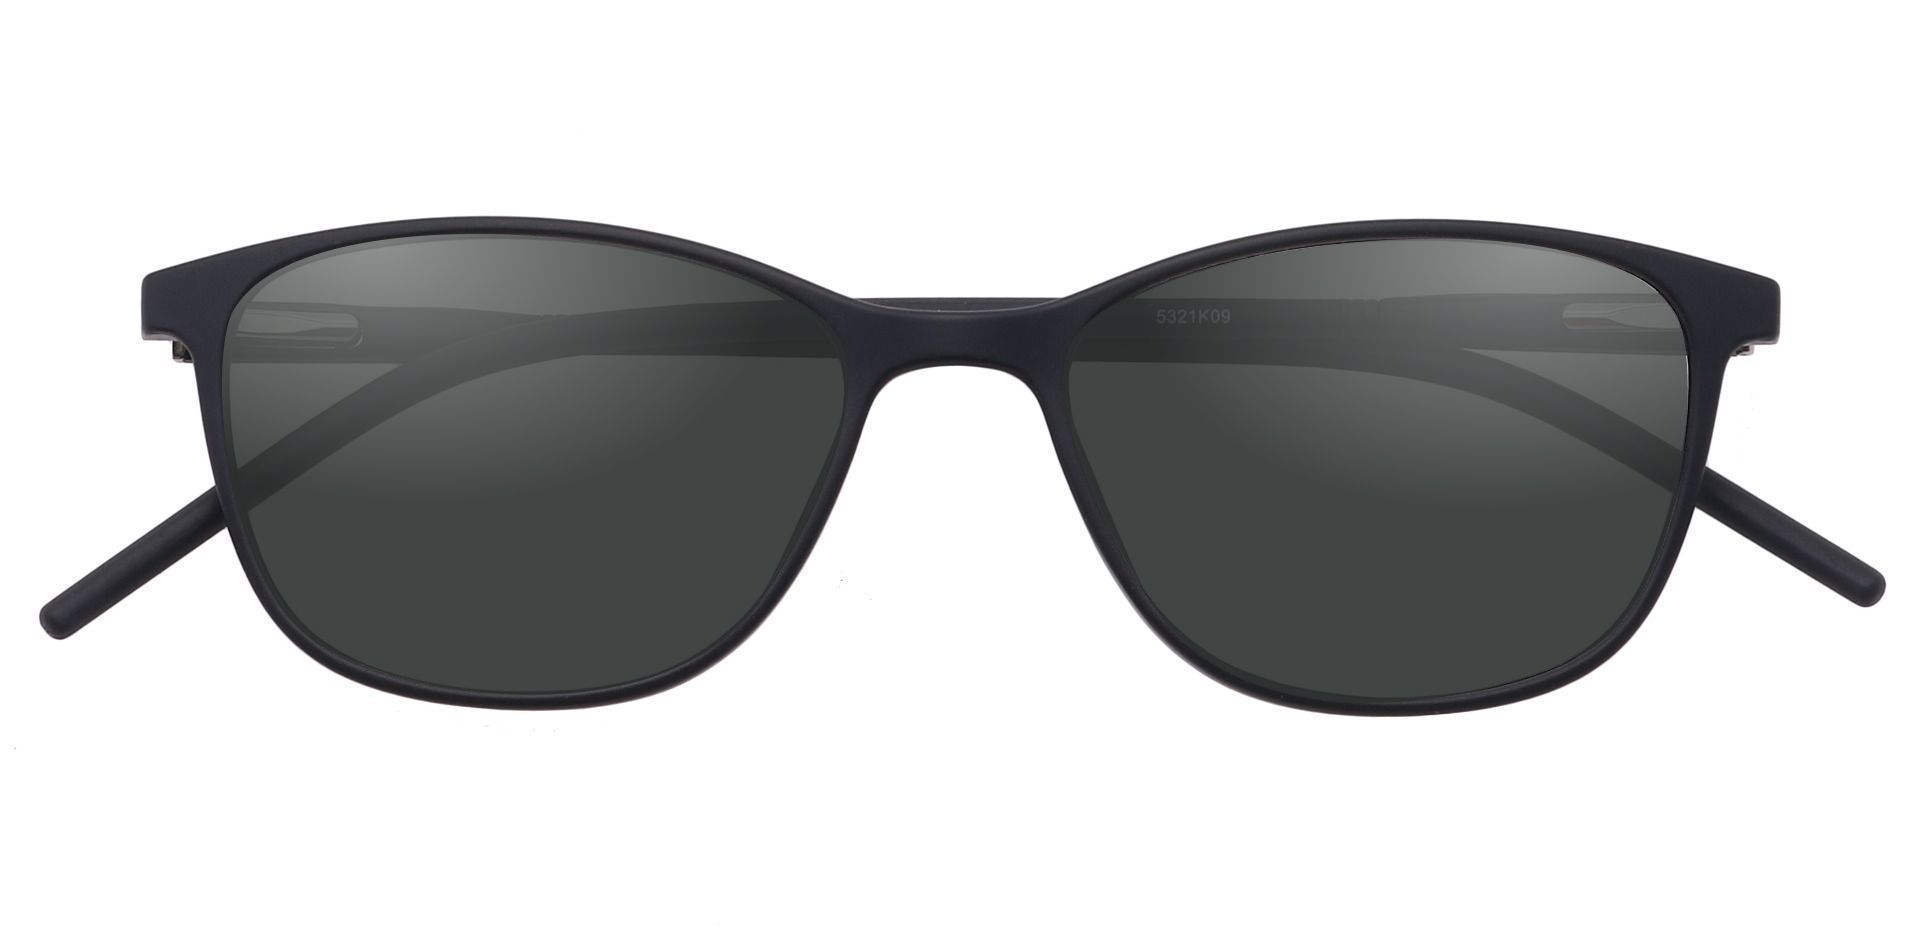 Hazel Square Lined Bifocal Sunglasses -  Black Frame With Gray Lenses